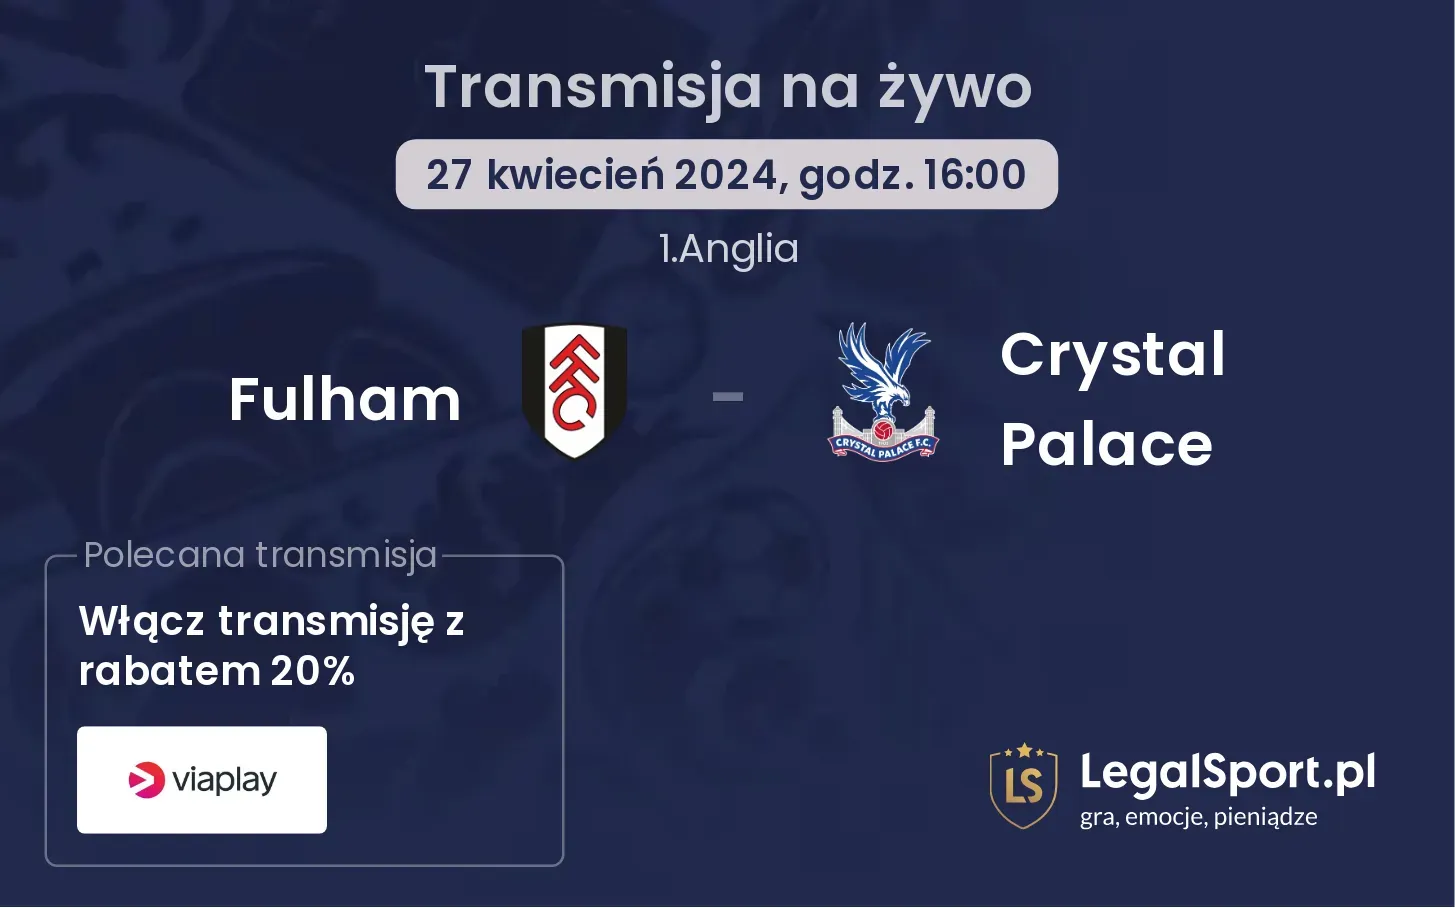 Fulham - Crystal Palace transmisja na żywo